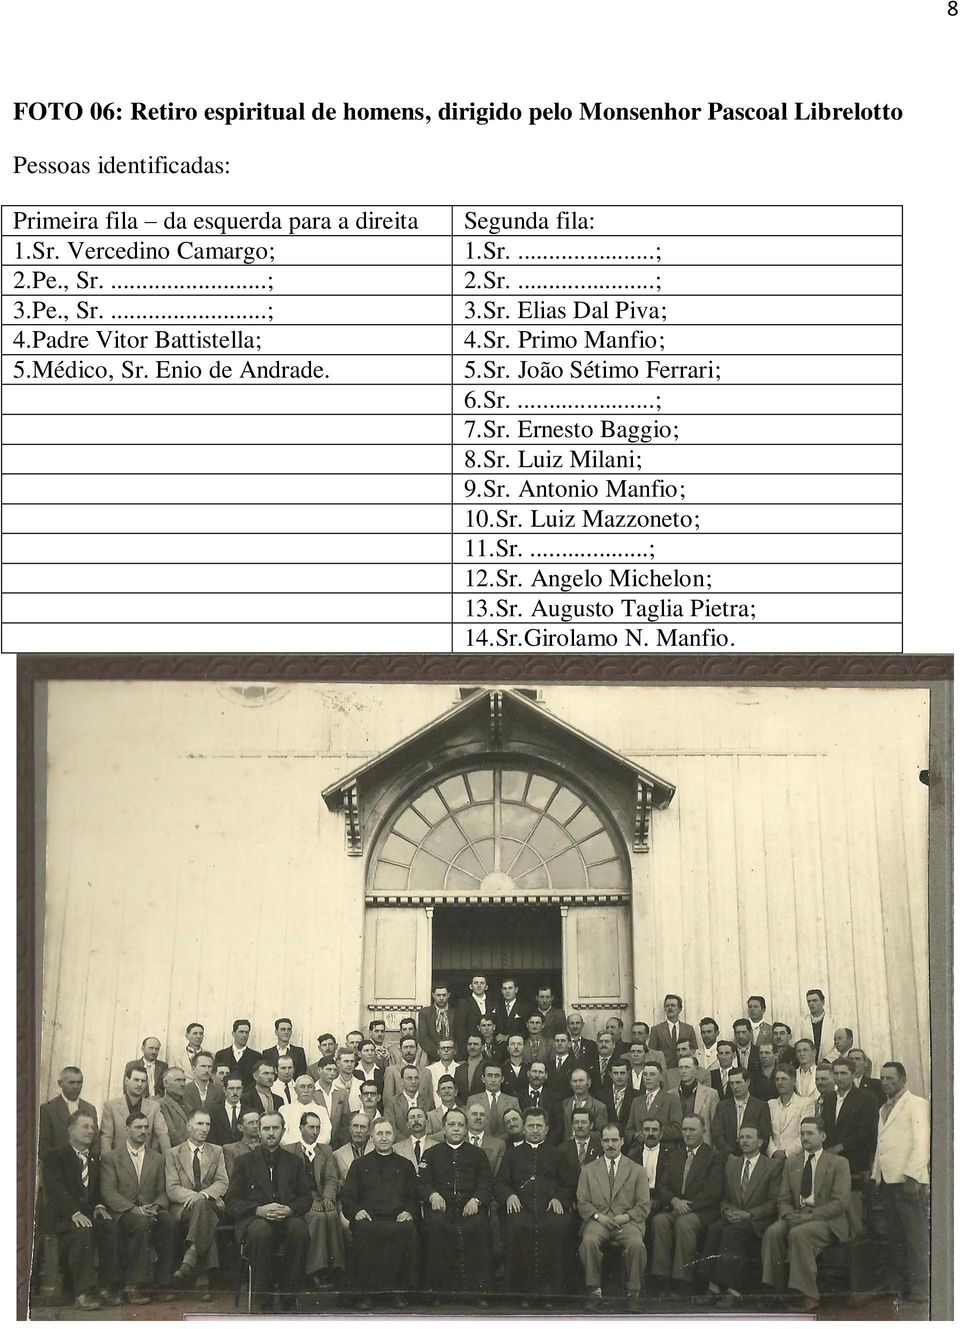 Padre Vitor Battistella; 4.Sr. Primo Manfio; 5.Médico, Sr. Enio de Andrade. 5.Sr. João Sétimo Ferrari; 6.Sr....; 7.Sr. Ernesto Baggio; 8.